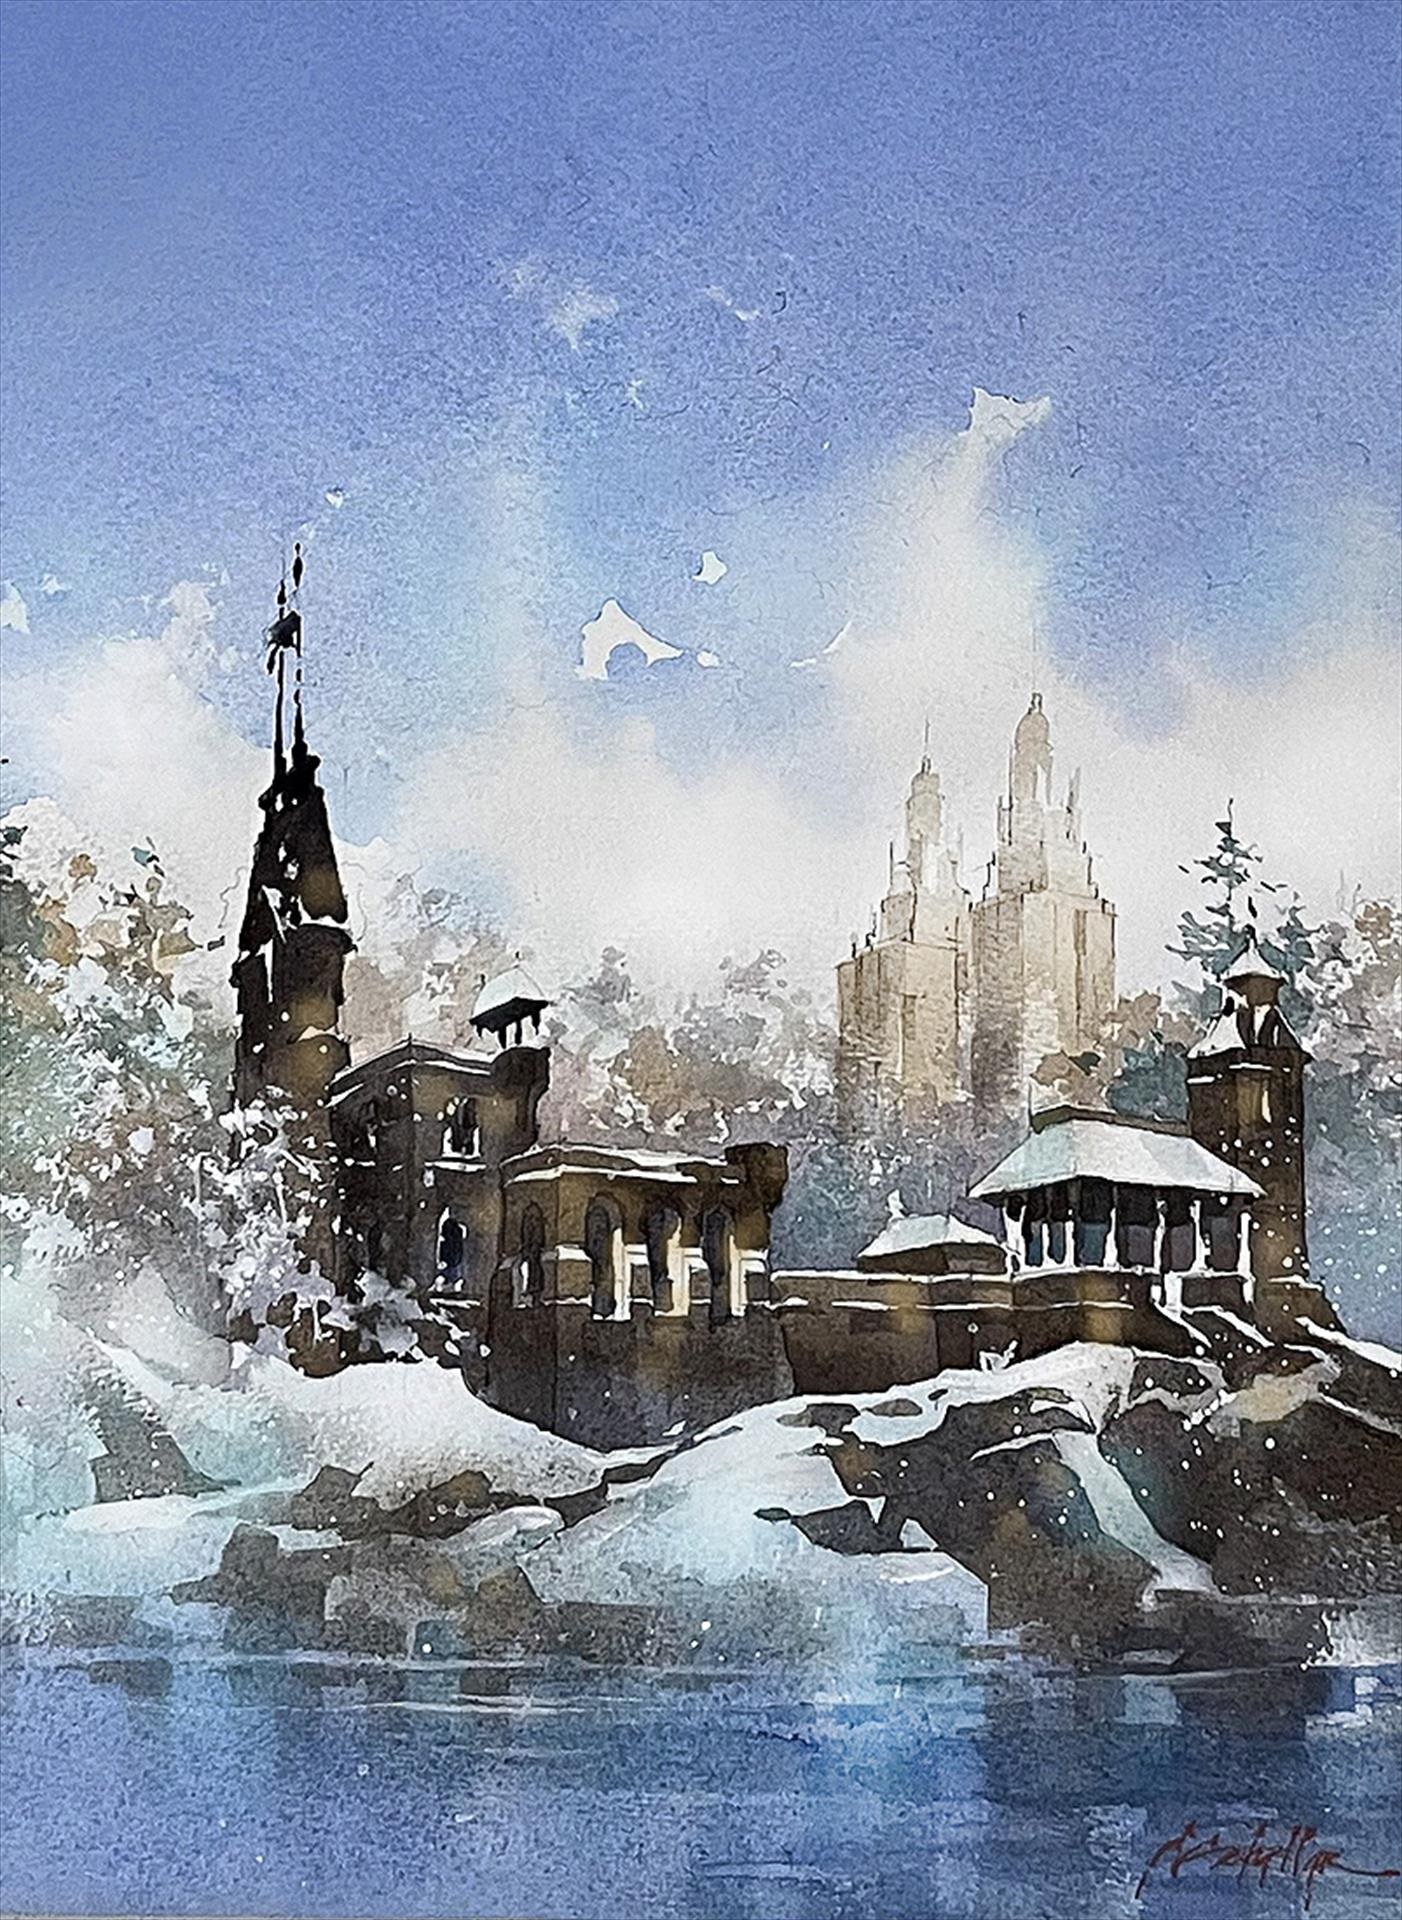 Thomas Schaller, "Winter – Belvedere Castle," watercolor on paper, 15 x 12 inches